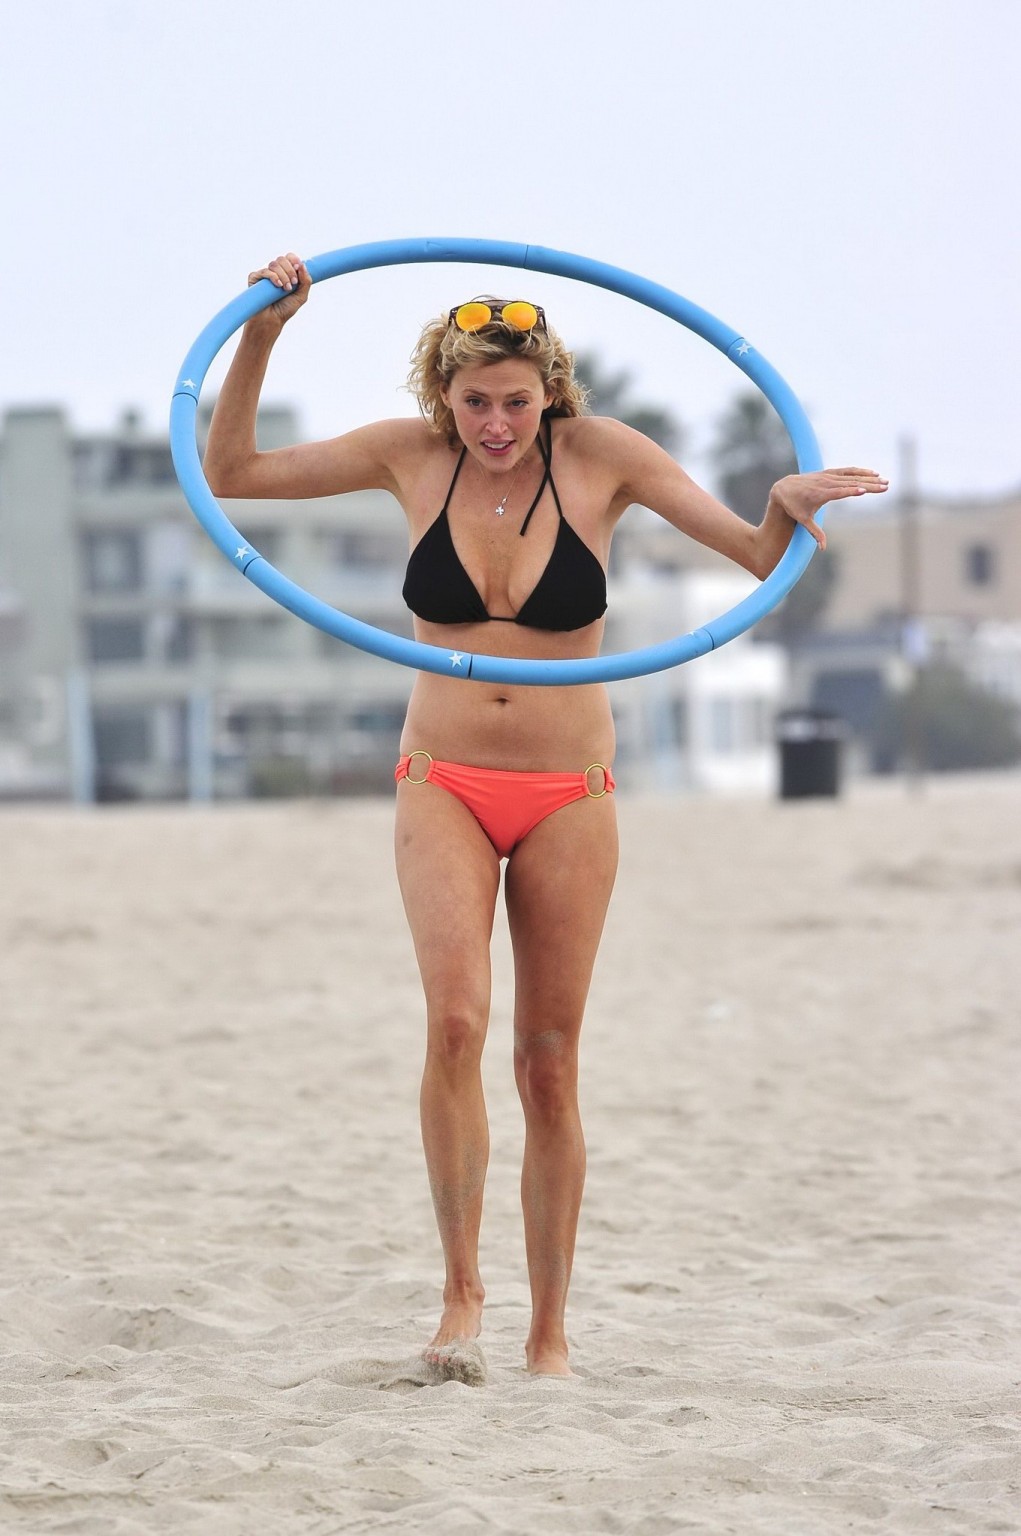 Estella warren en bikini girando el aro de hula en la playa de venecia
 #75188420